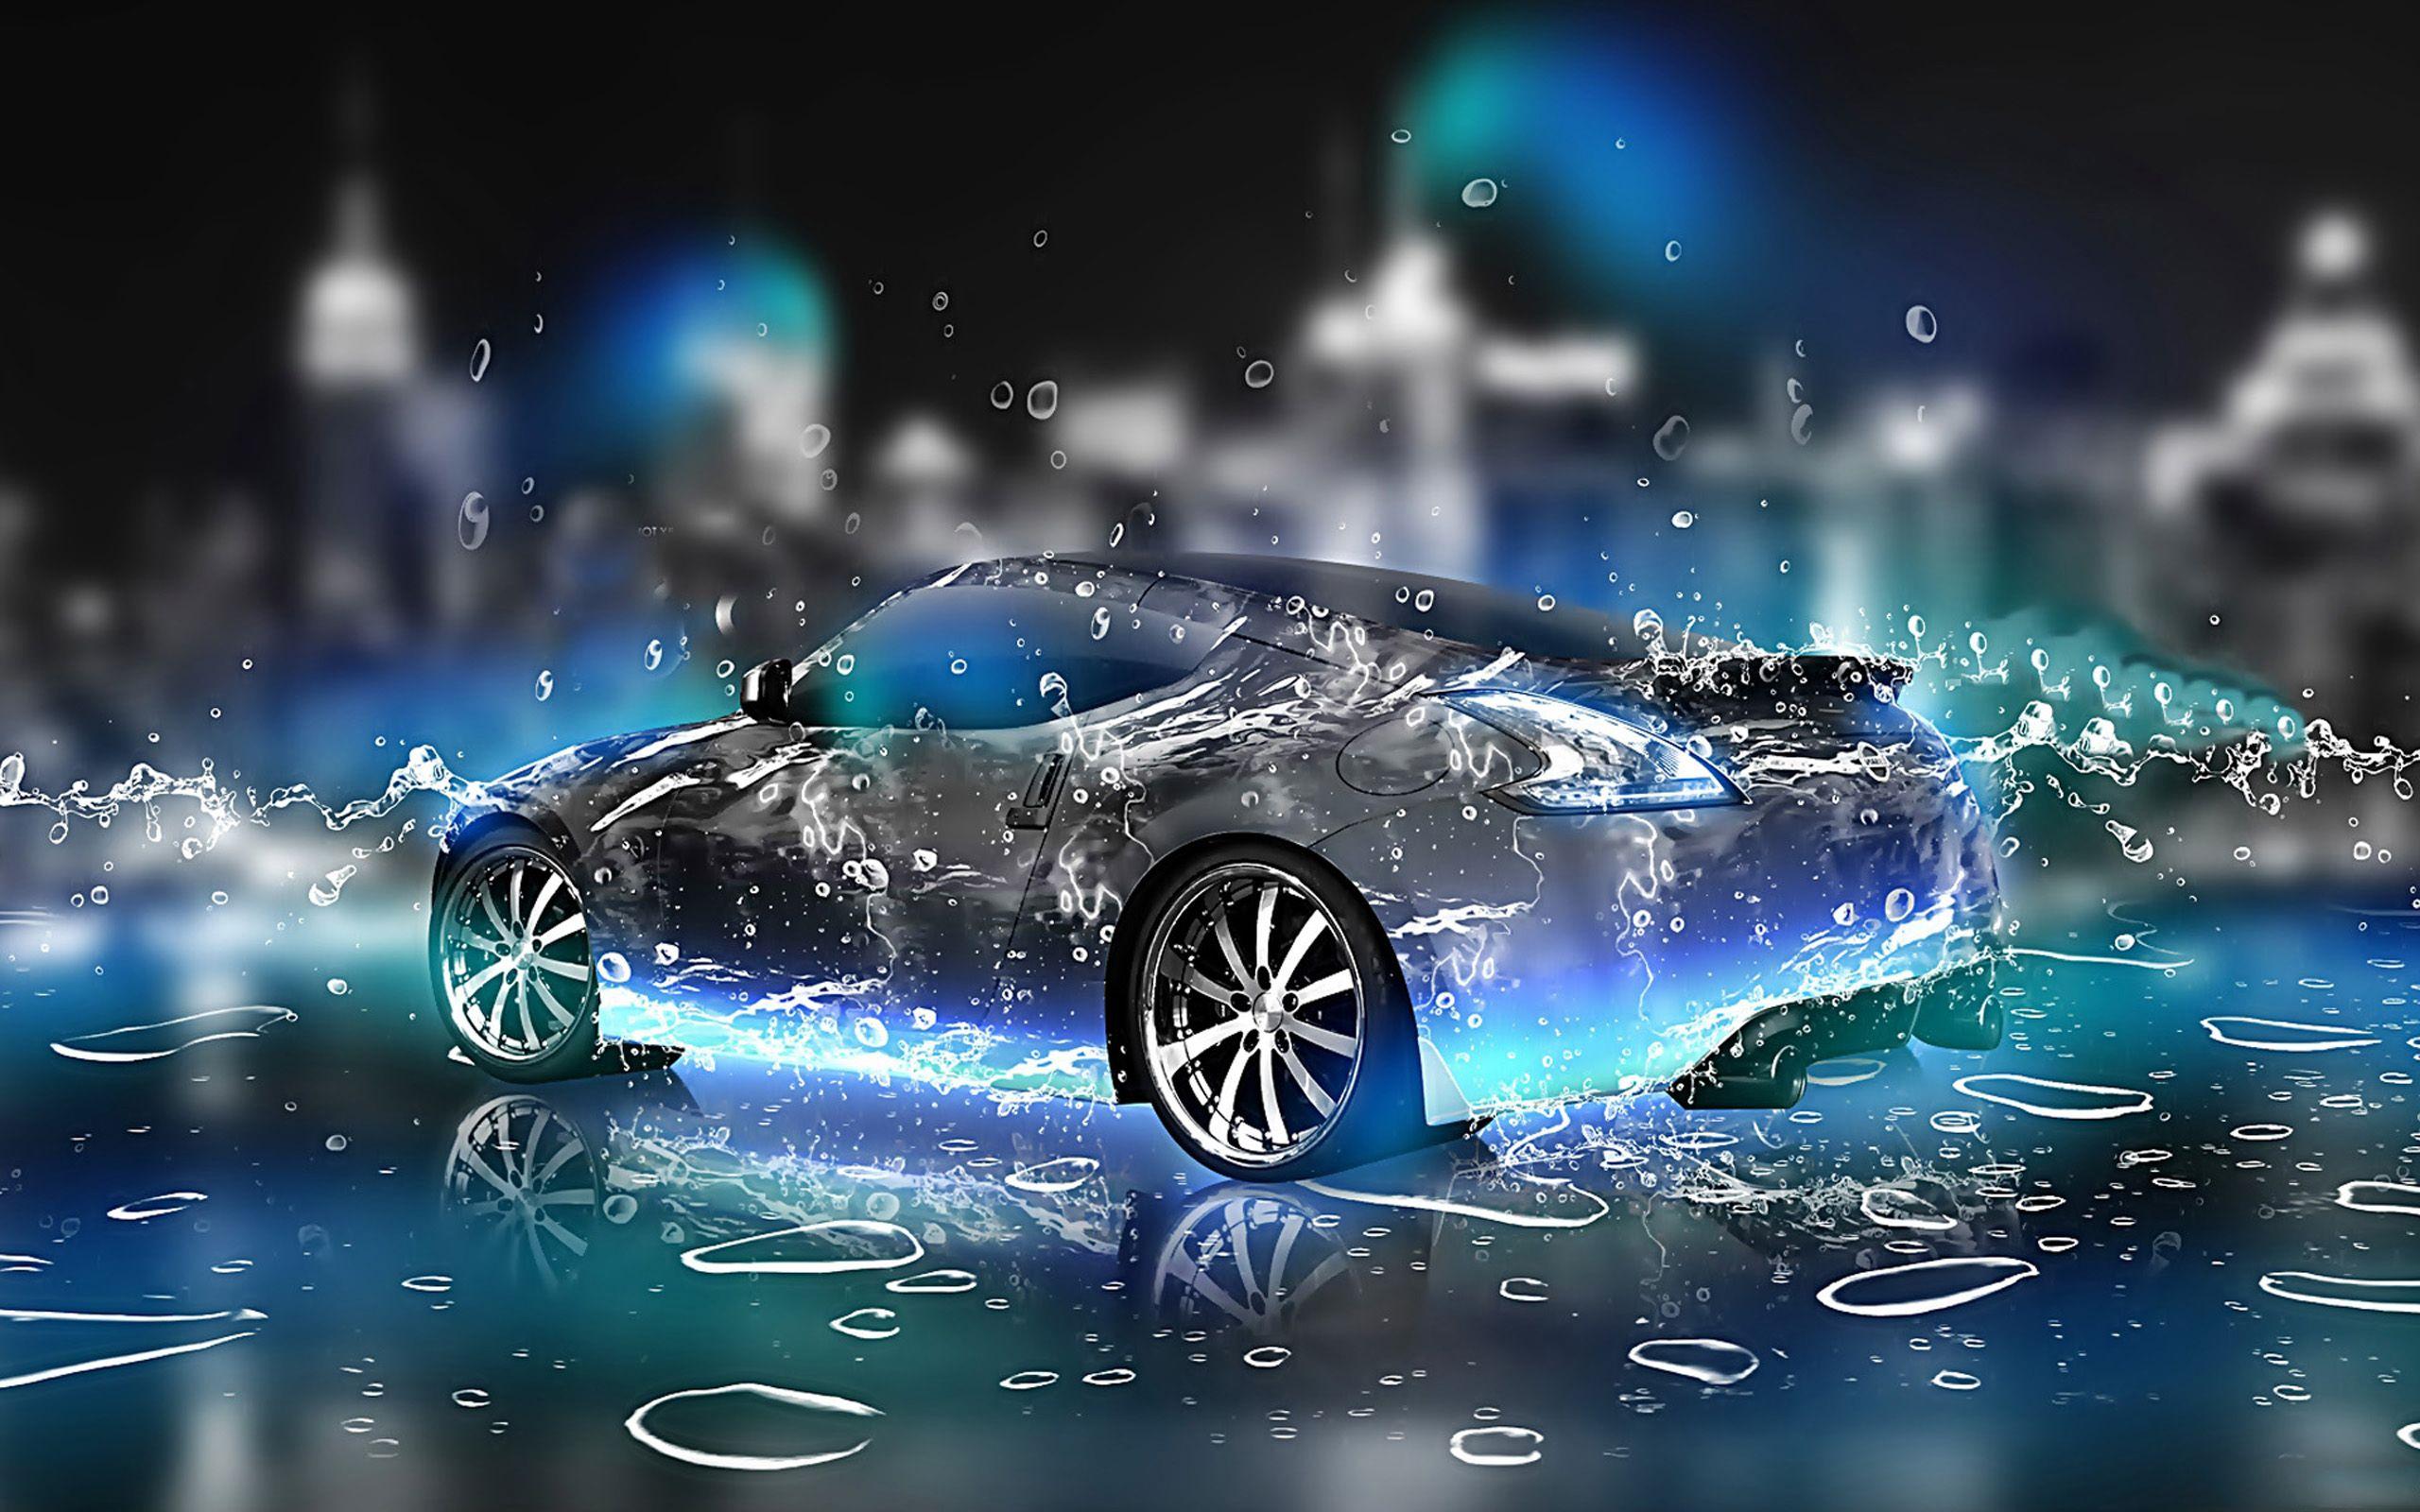 Wallpaper.wiki 3D Car Hd Picture Widescreen Hd Hq Latest Water